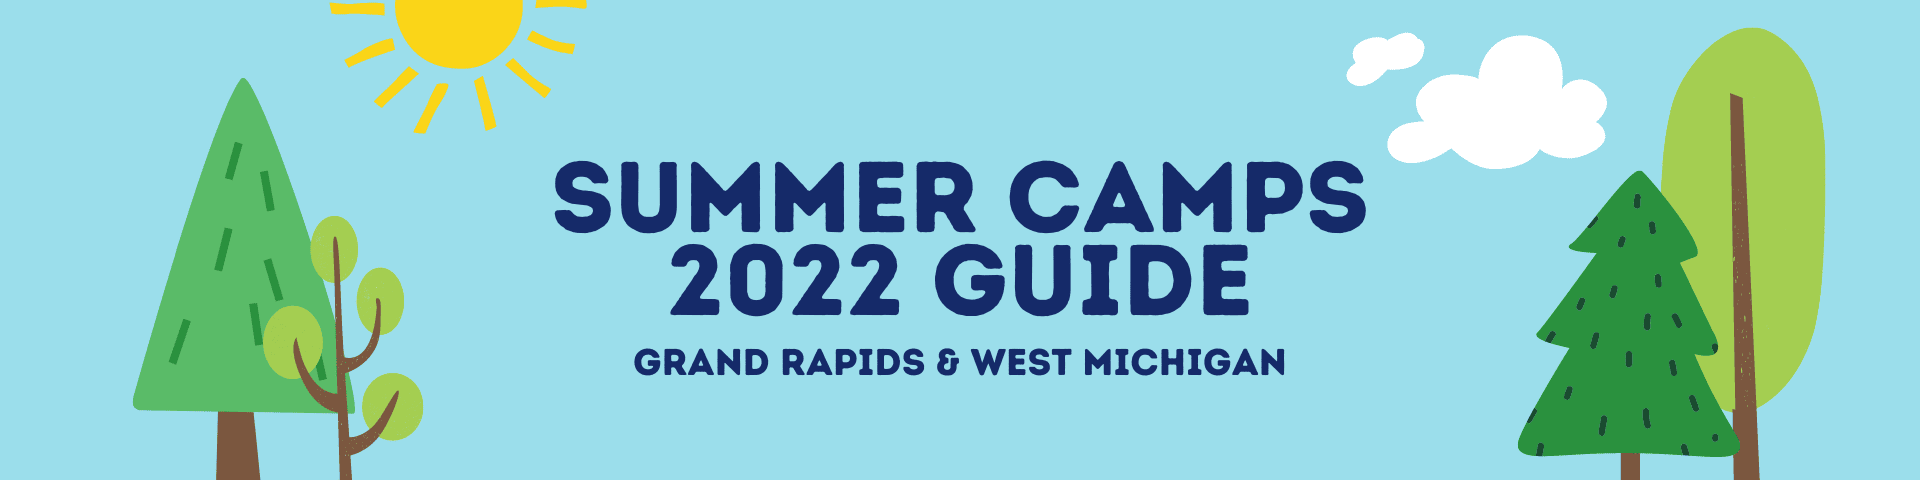 2022 Summer Camps Guide Header 1